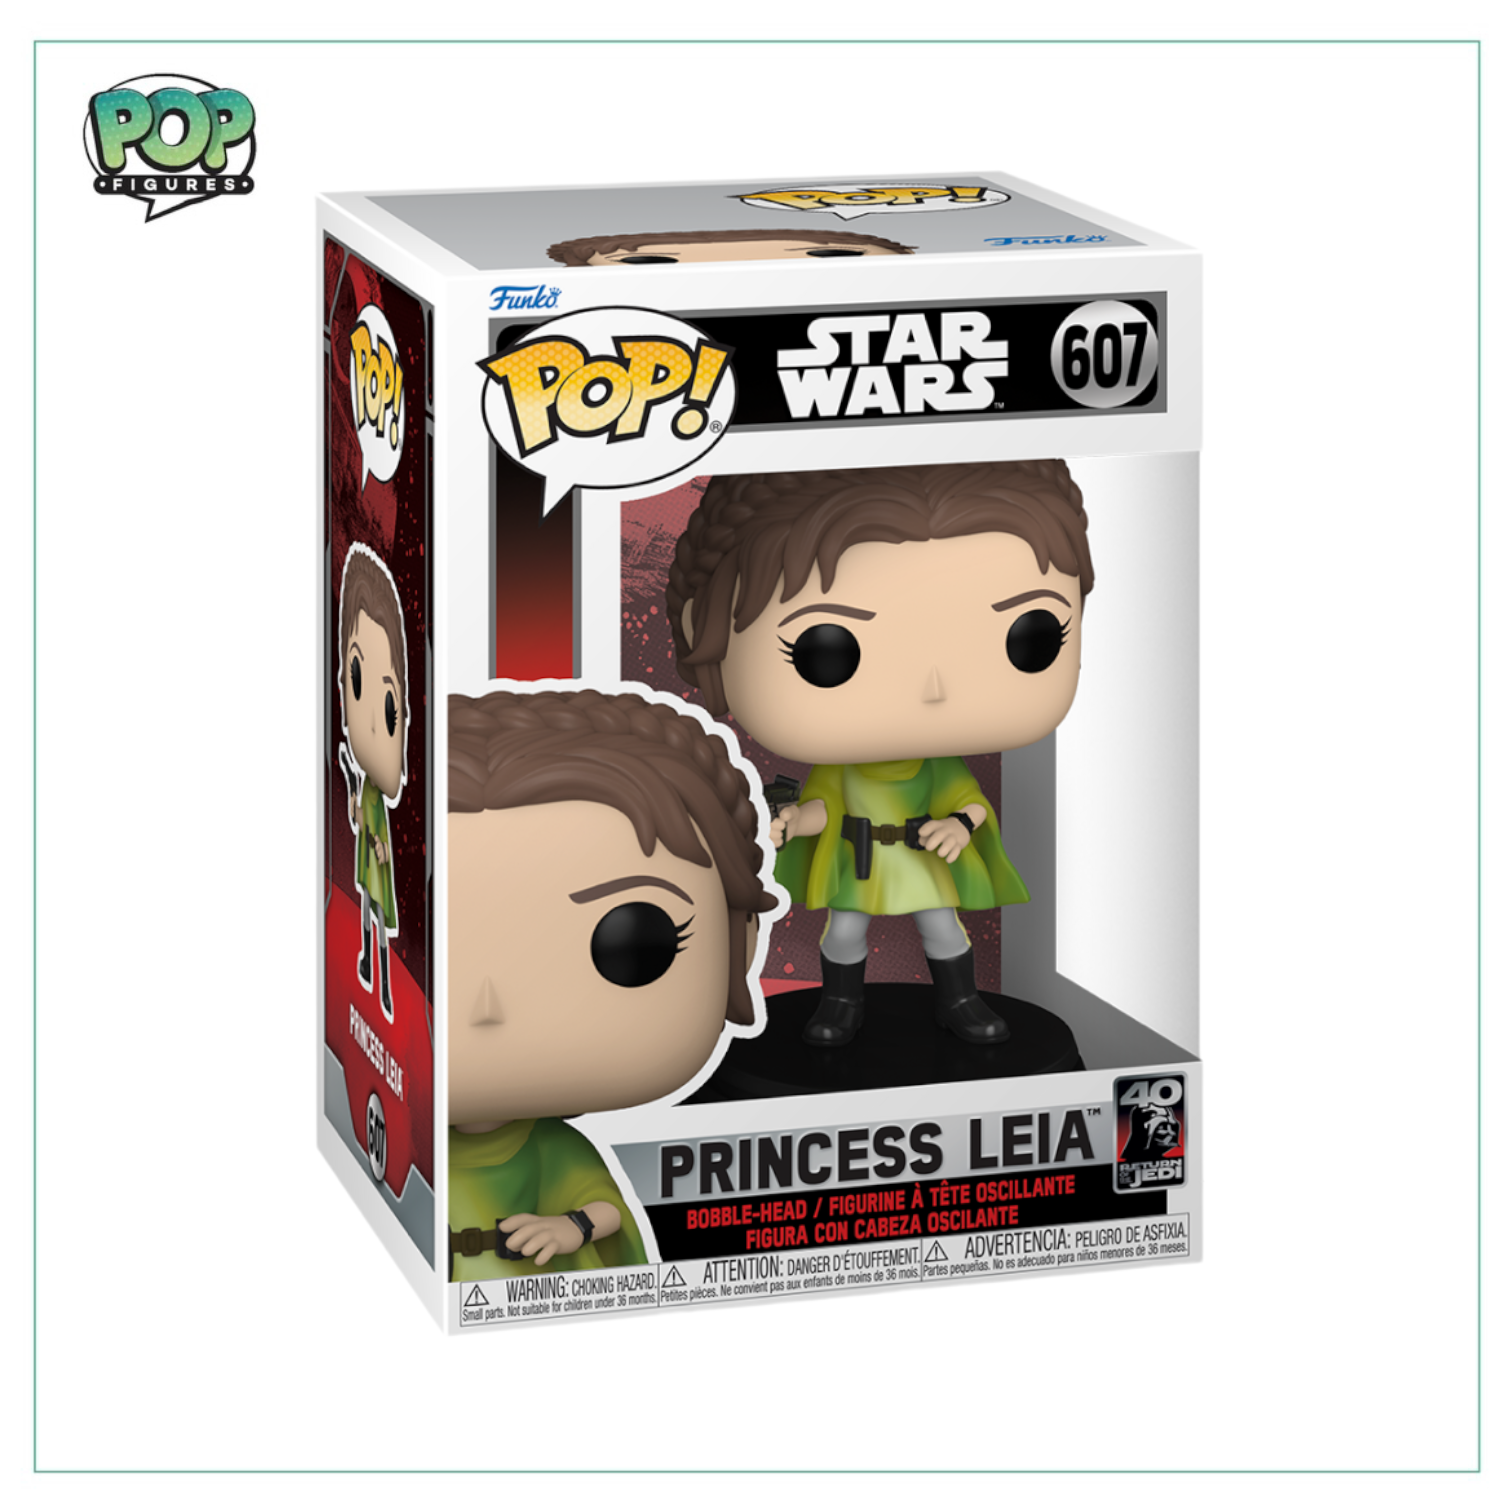 Princess Leia #607 Funko Pop! Star Wars - Return of the Jedi 40th